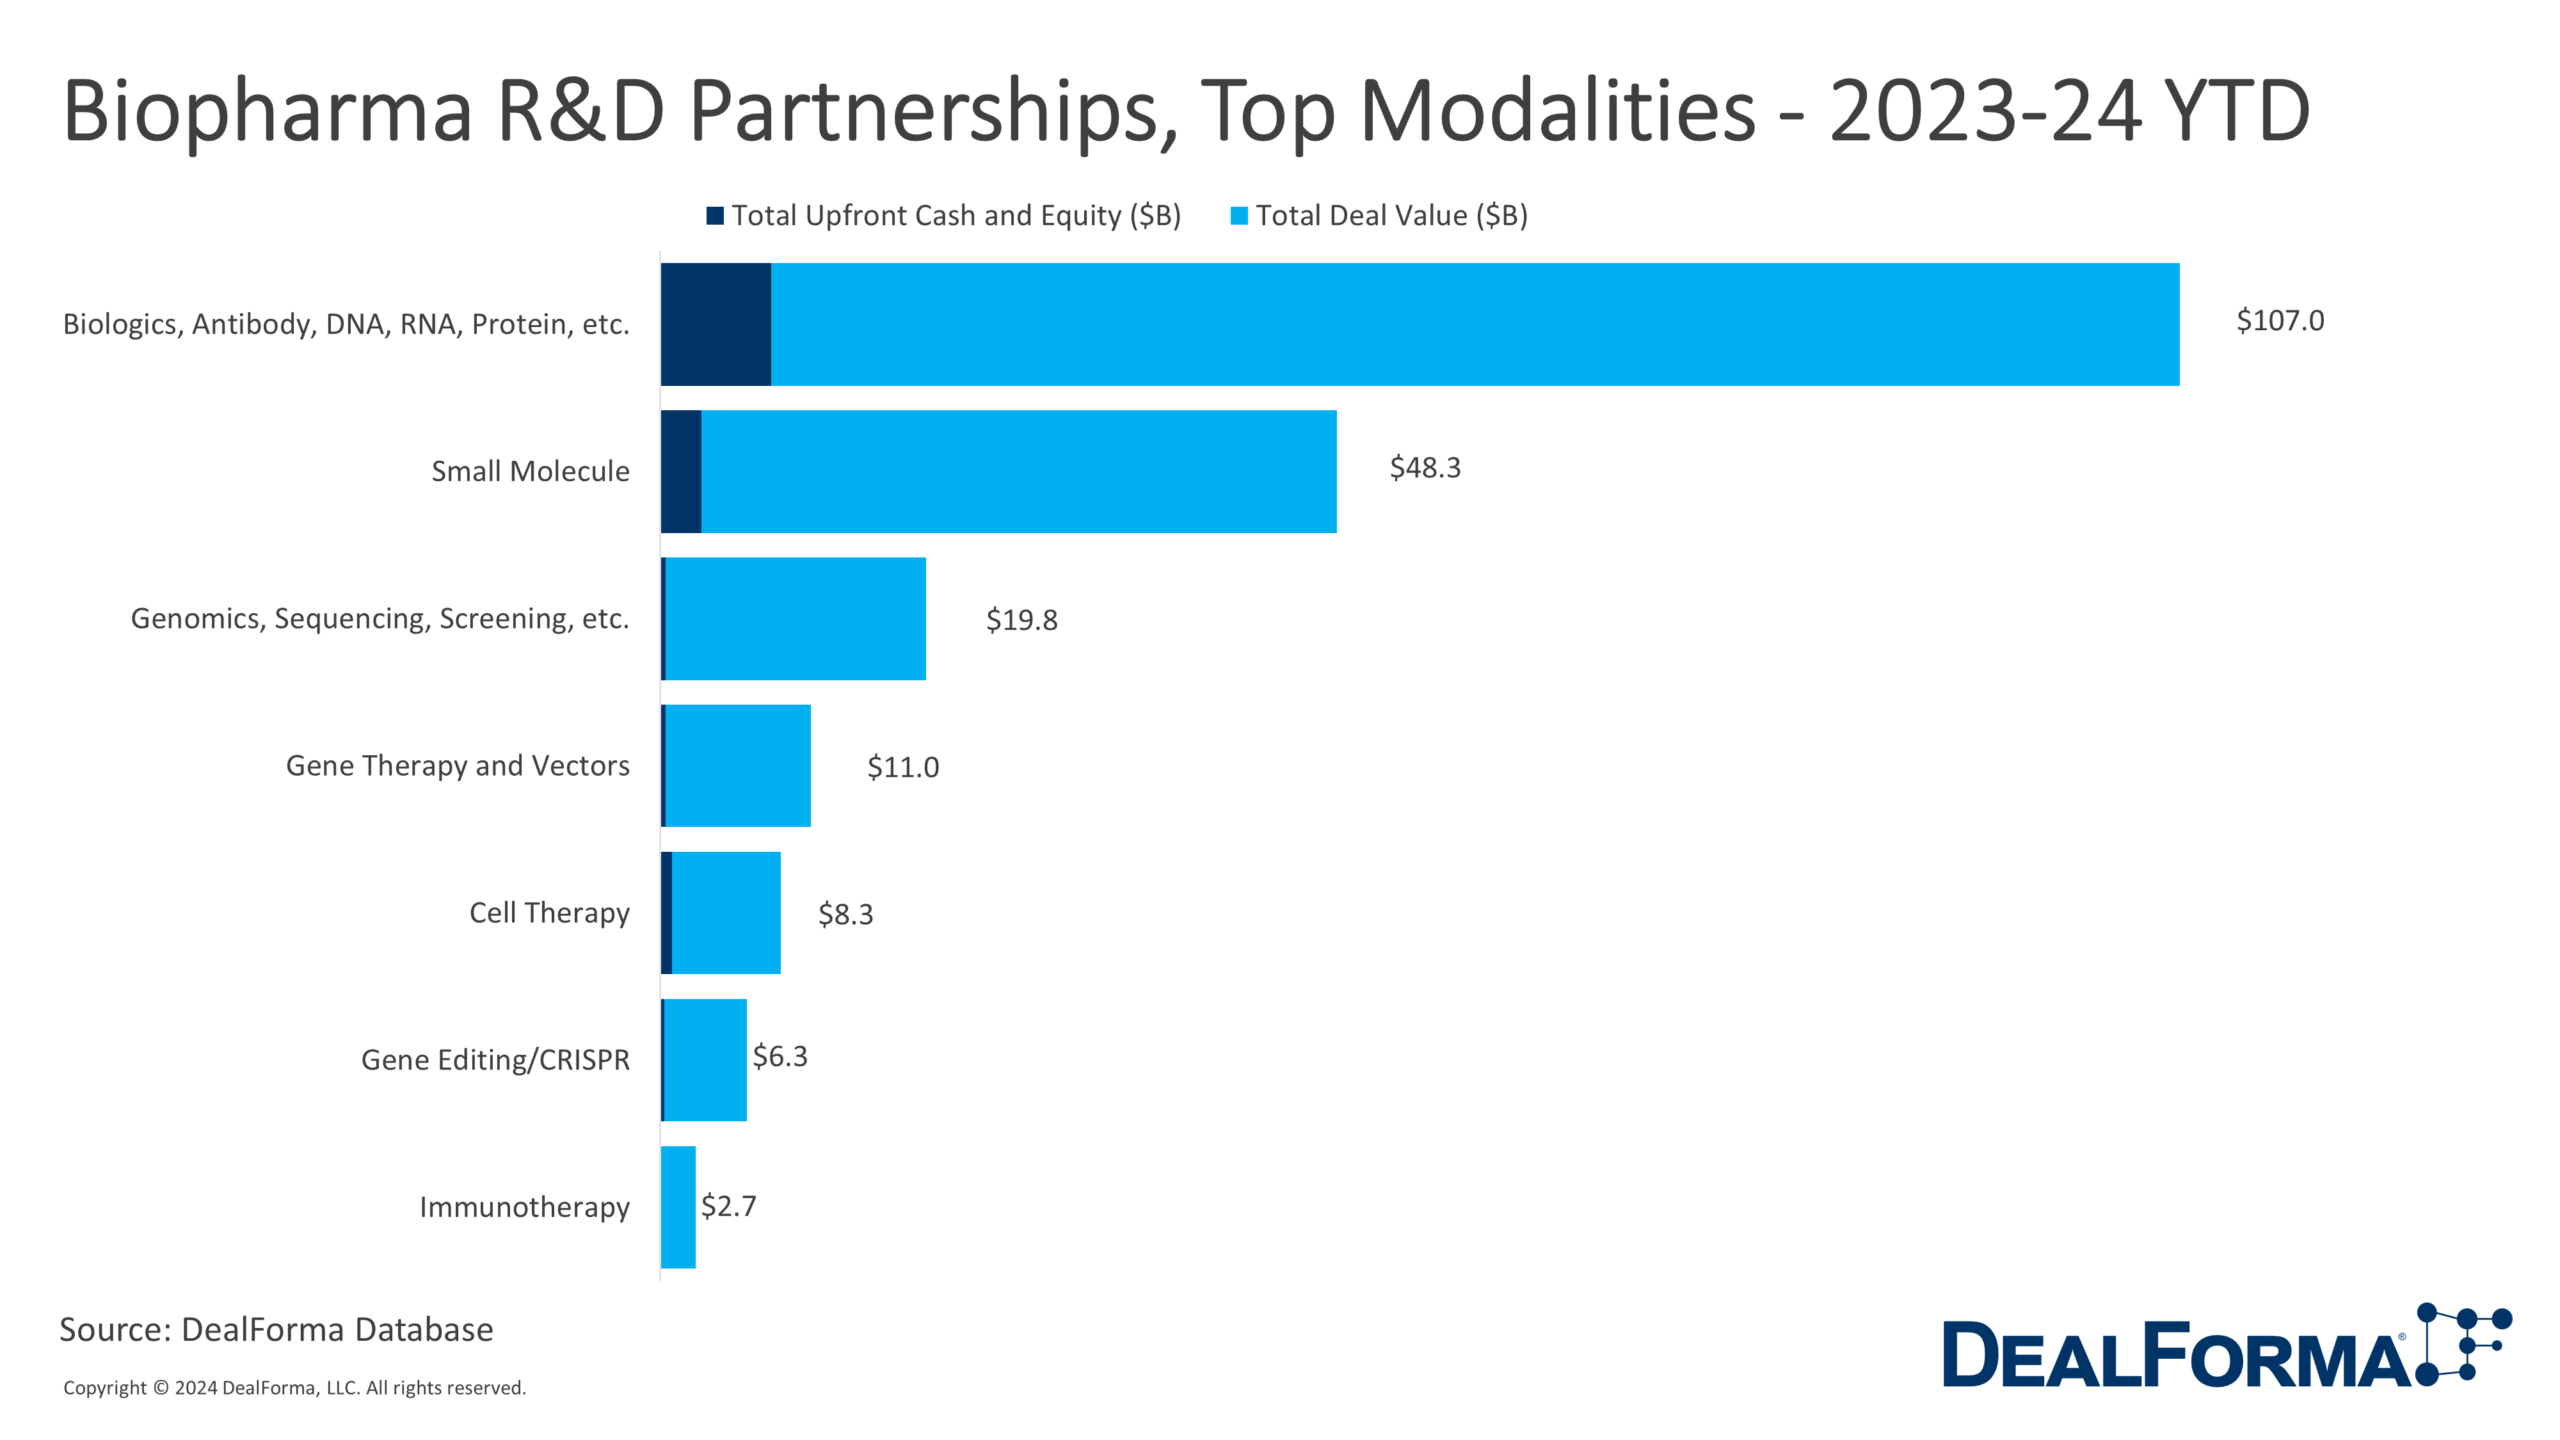 Biopharma R&D Partnerships, Top Modalities - 2023-24 YTD